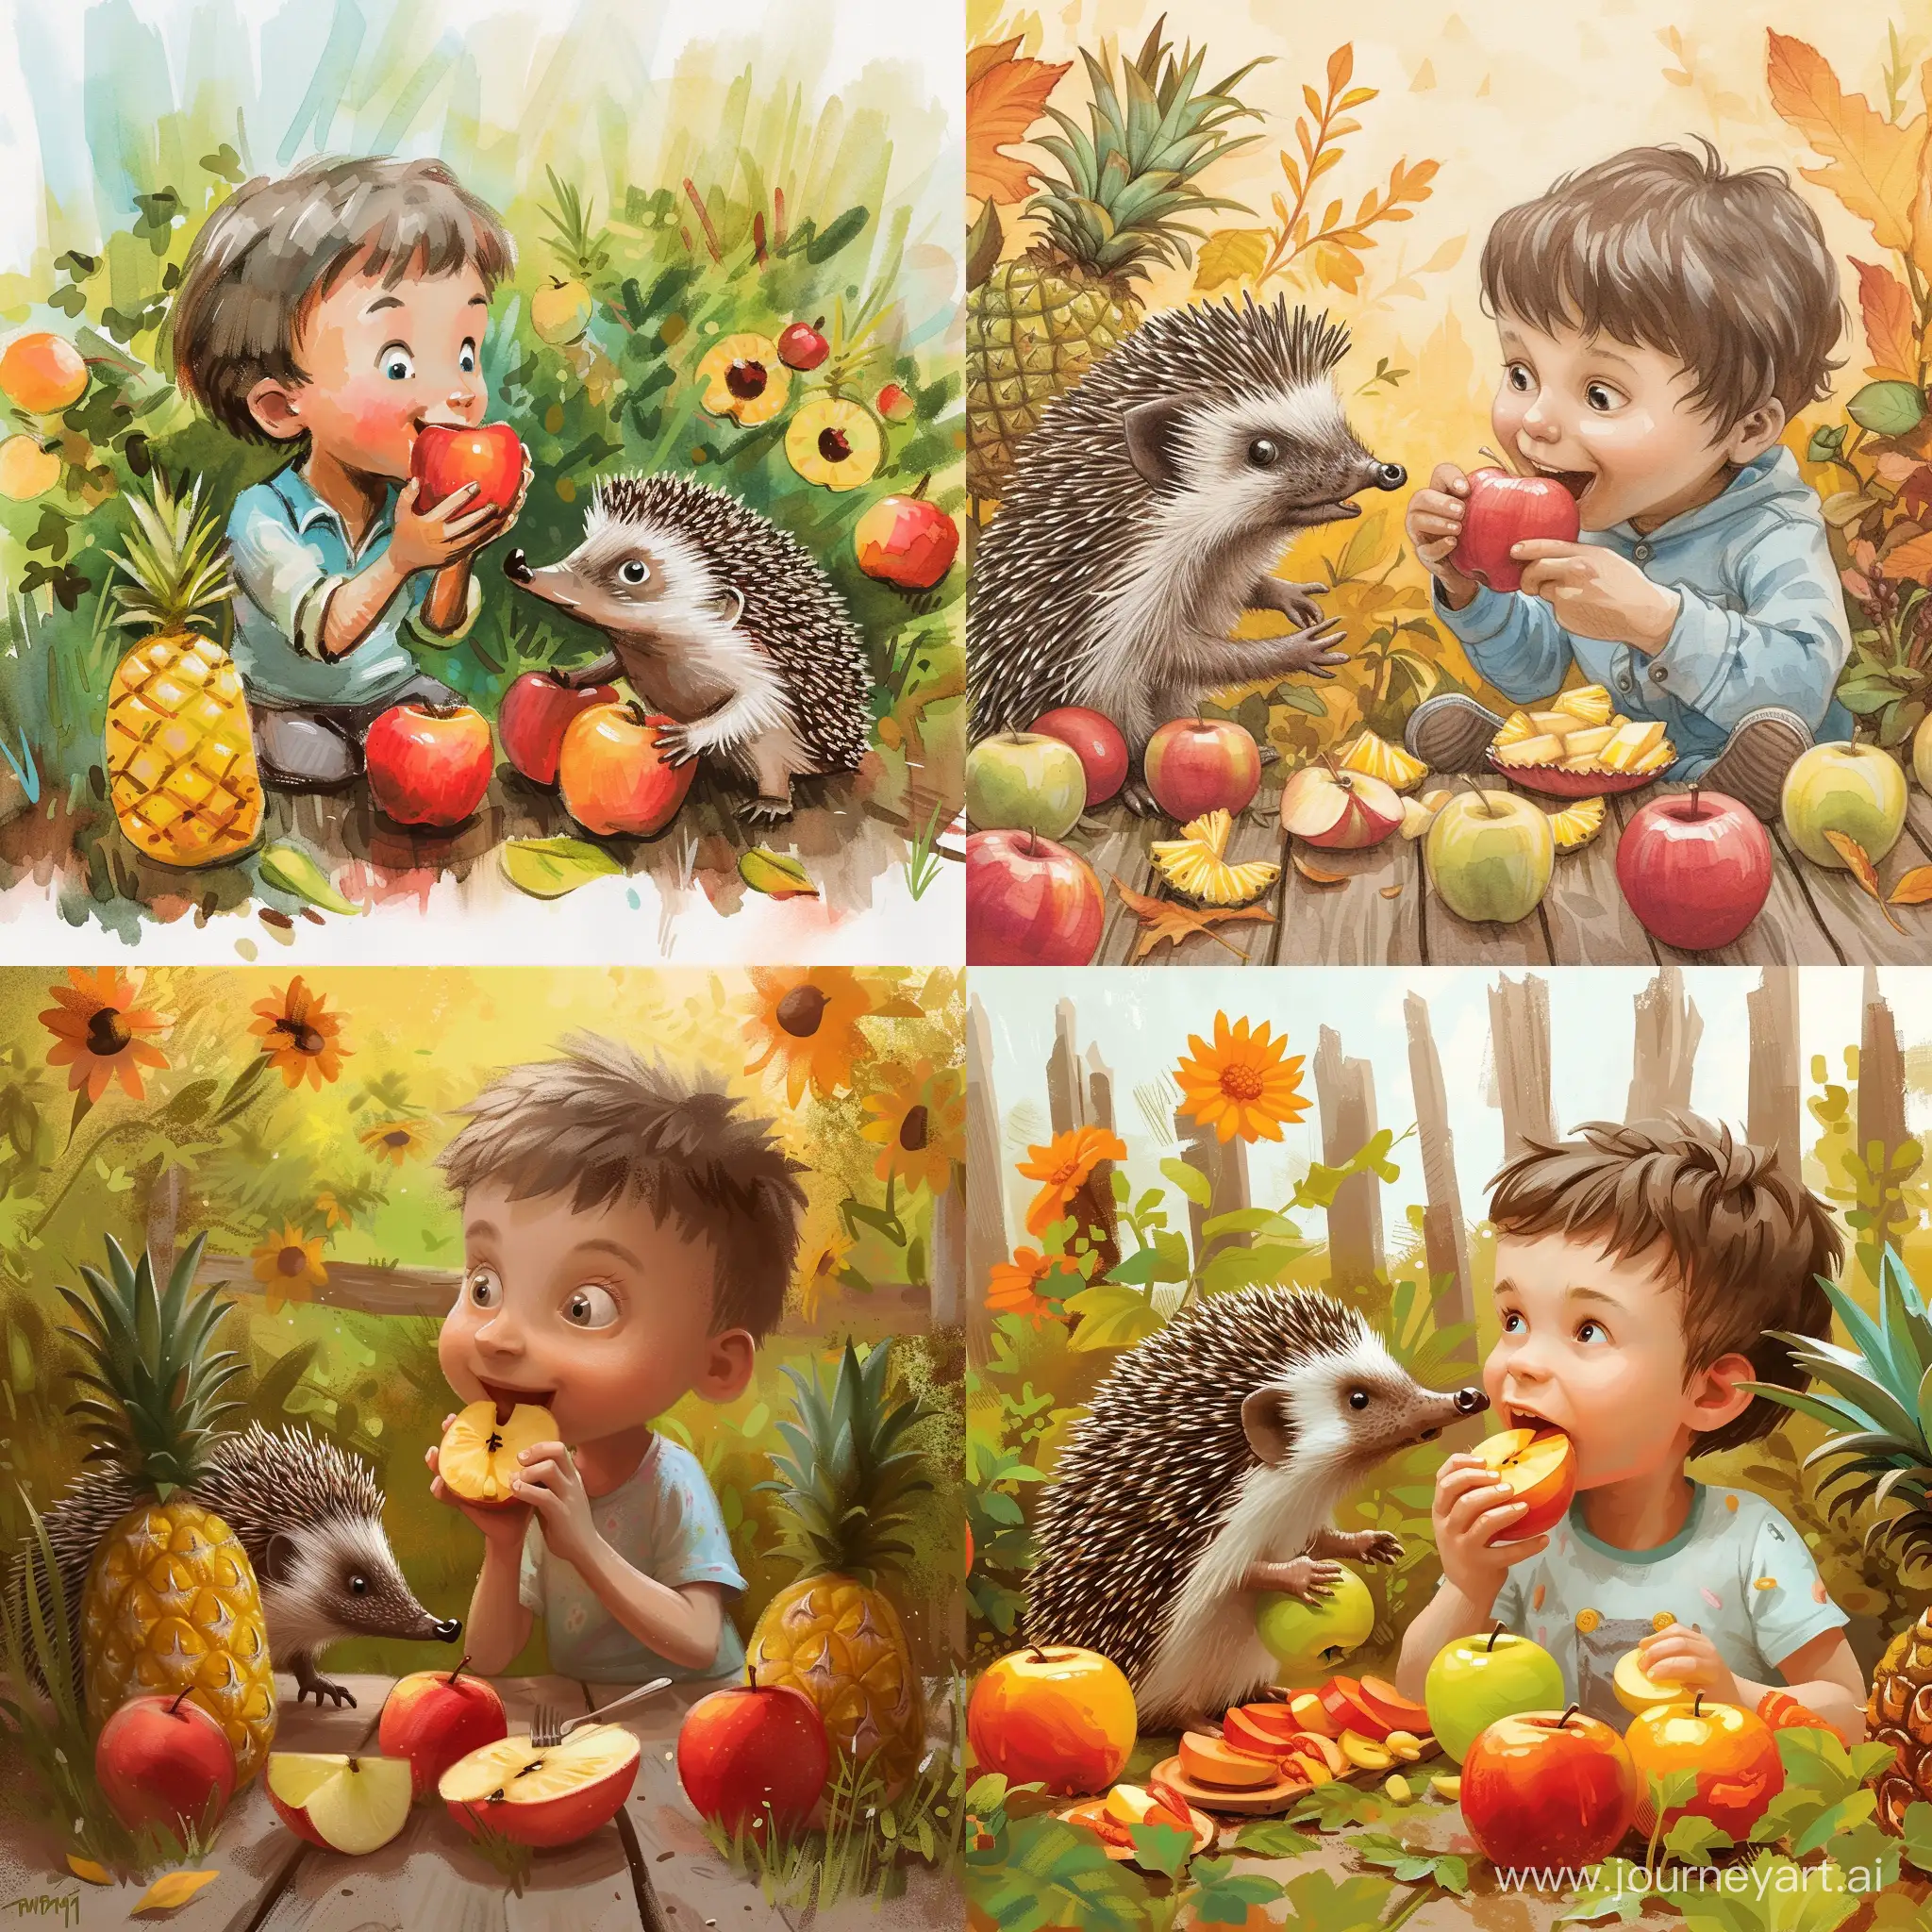 Young-Boy-Enjoying-Fruit-with-a-Hedgehog-in-Garden